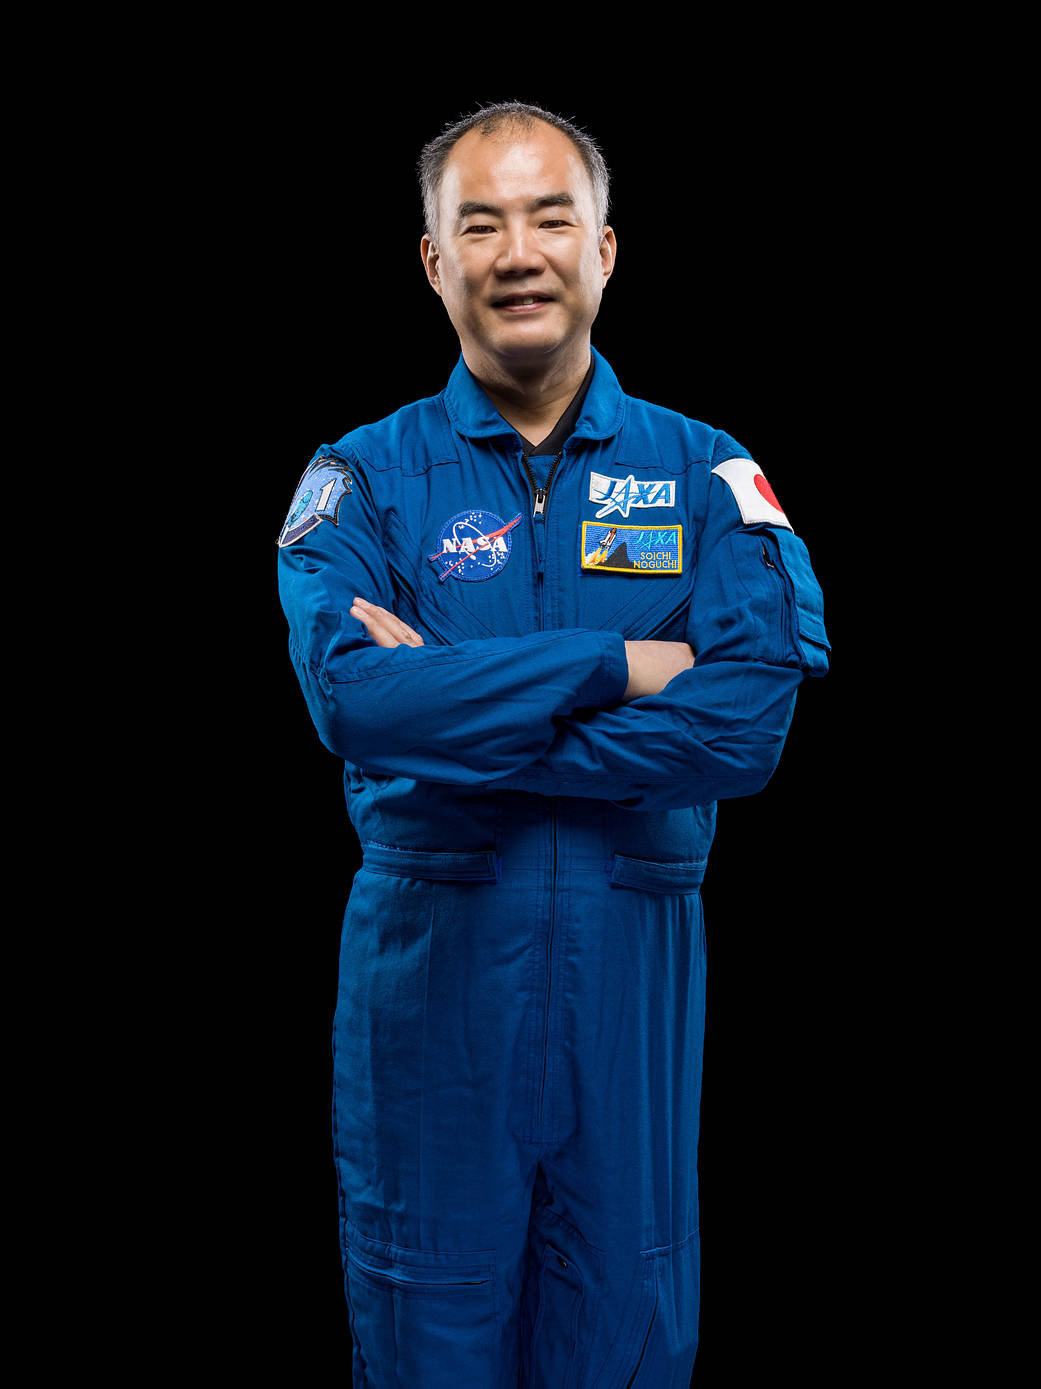 SpaceX Crew-1 Mission Specialist Soichi Noguchi of JAXA